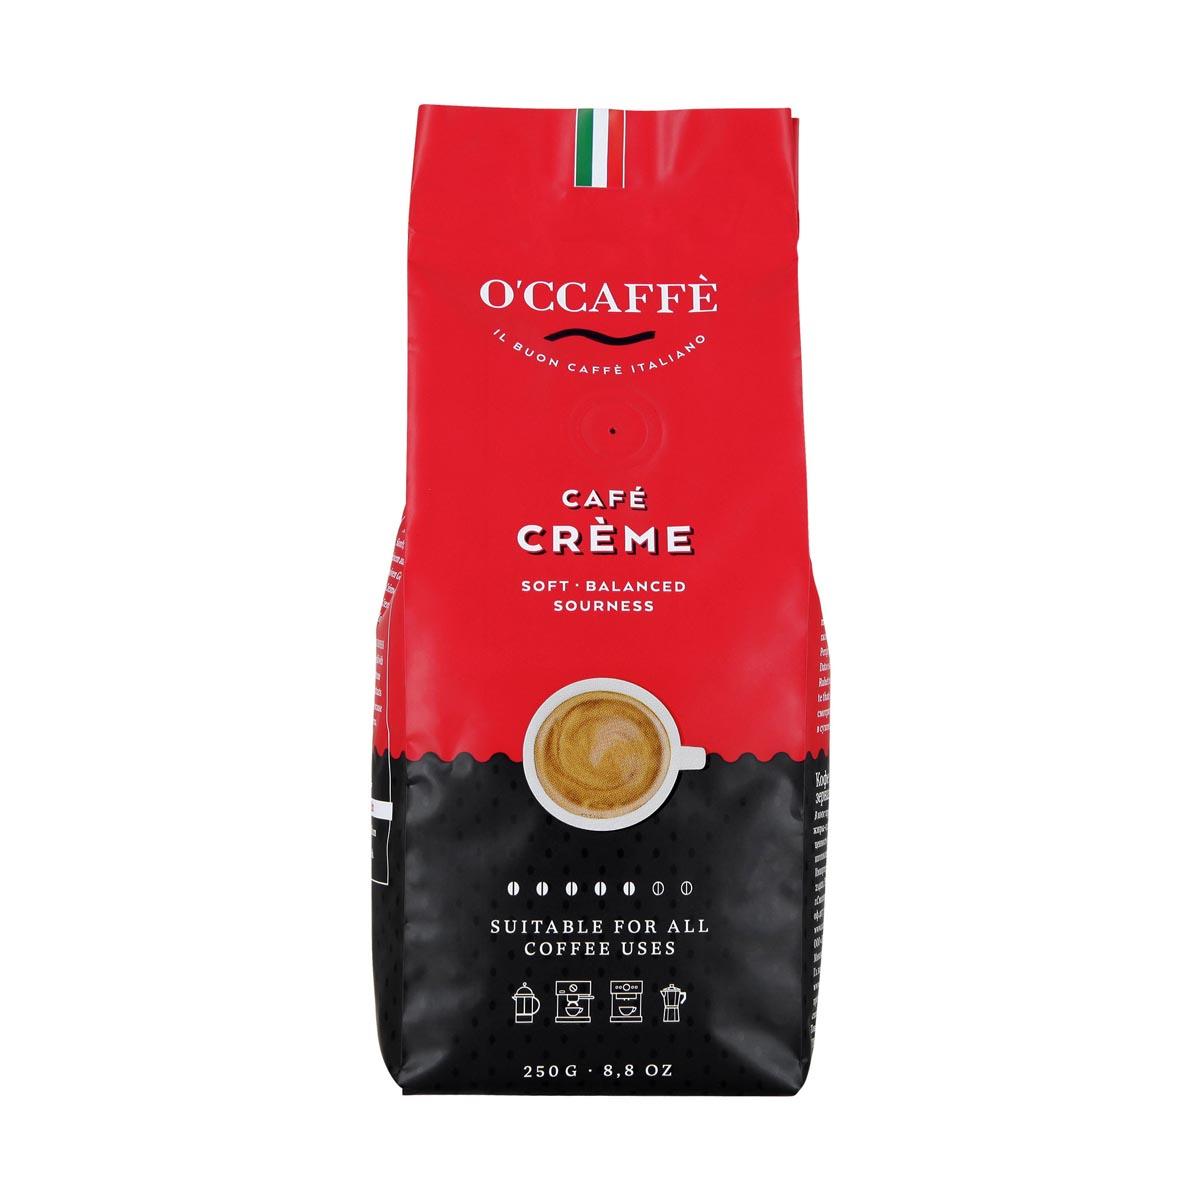 Cafenet – Caffè Vergnano - Café en grains – DECAFEINATO - Paquet 1kg